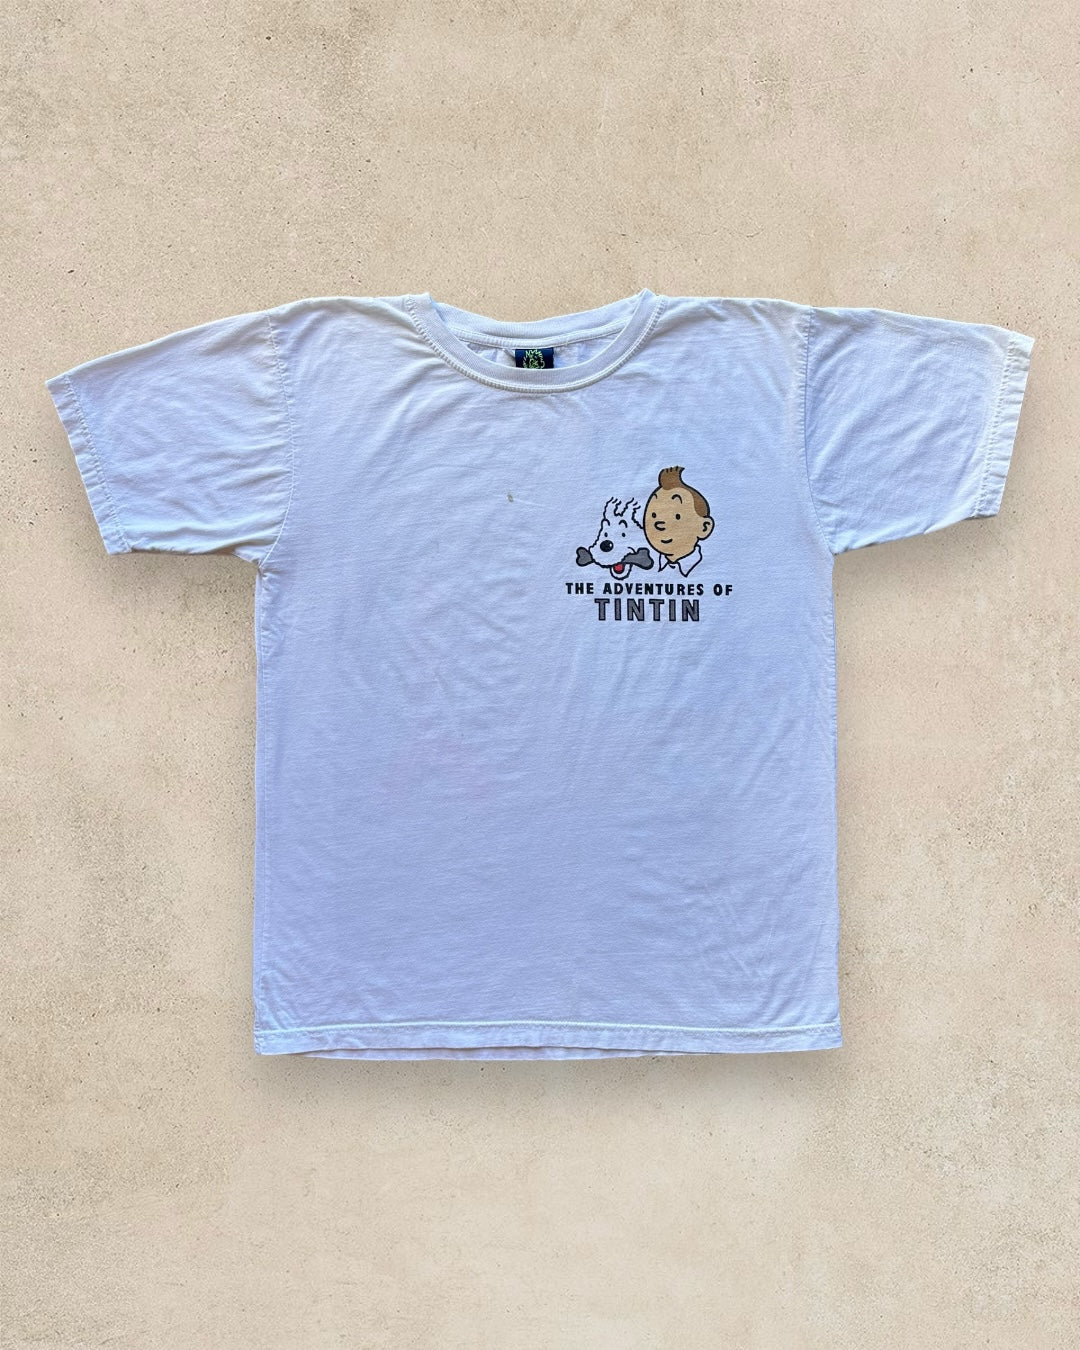 Vintage TinTin T-Shirt - S/M